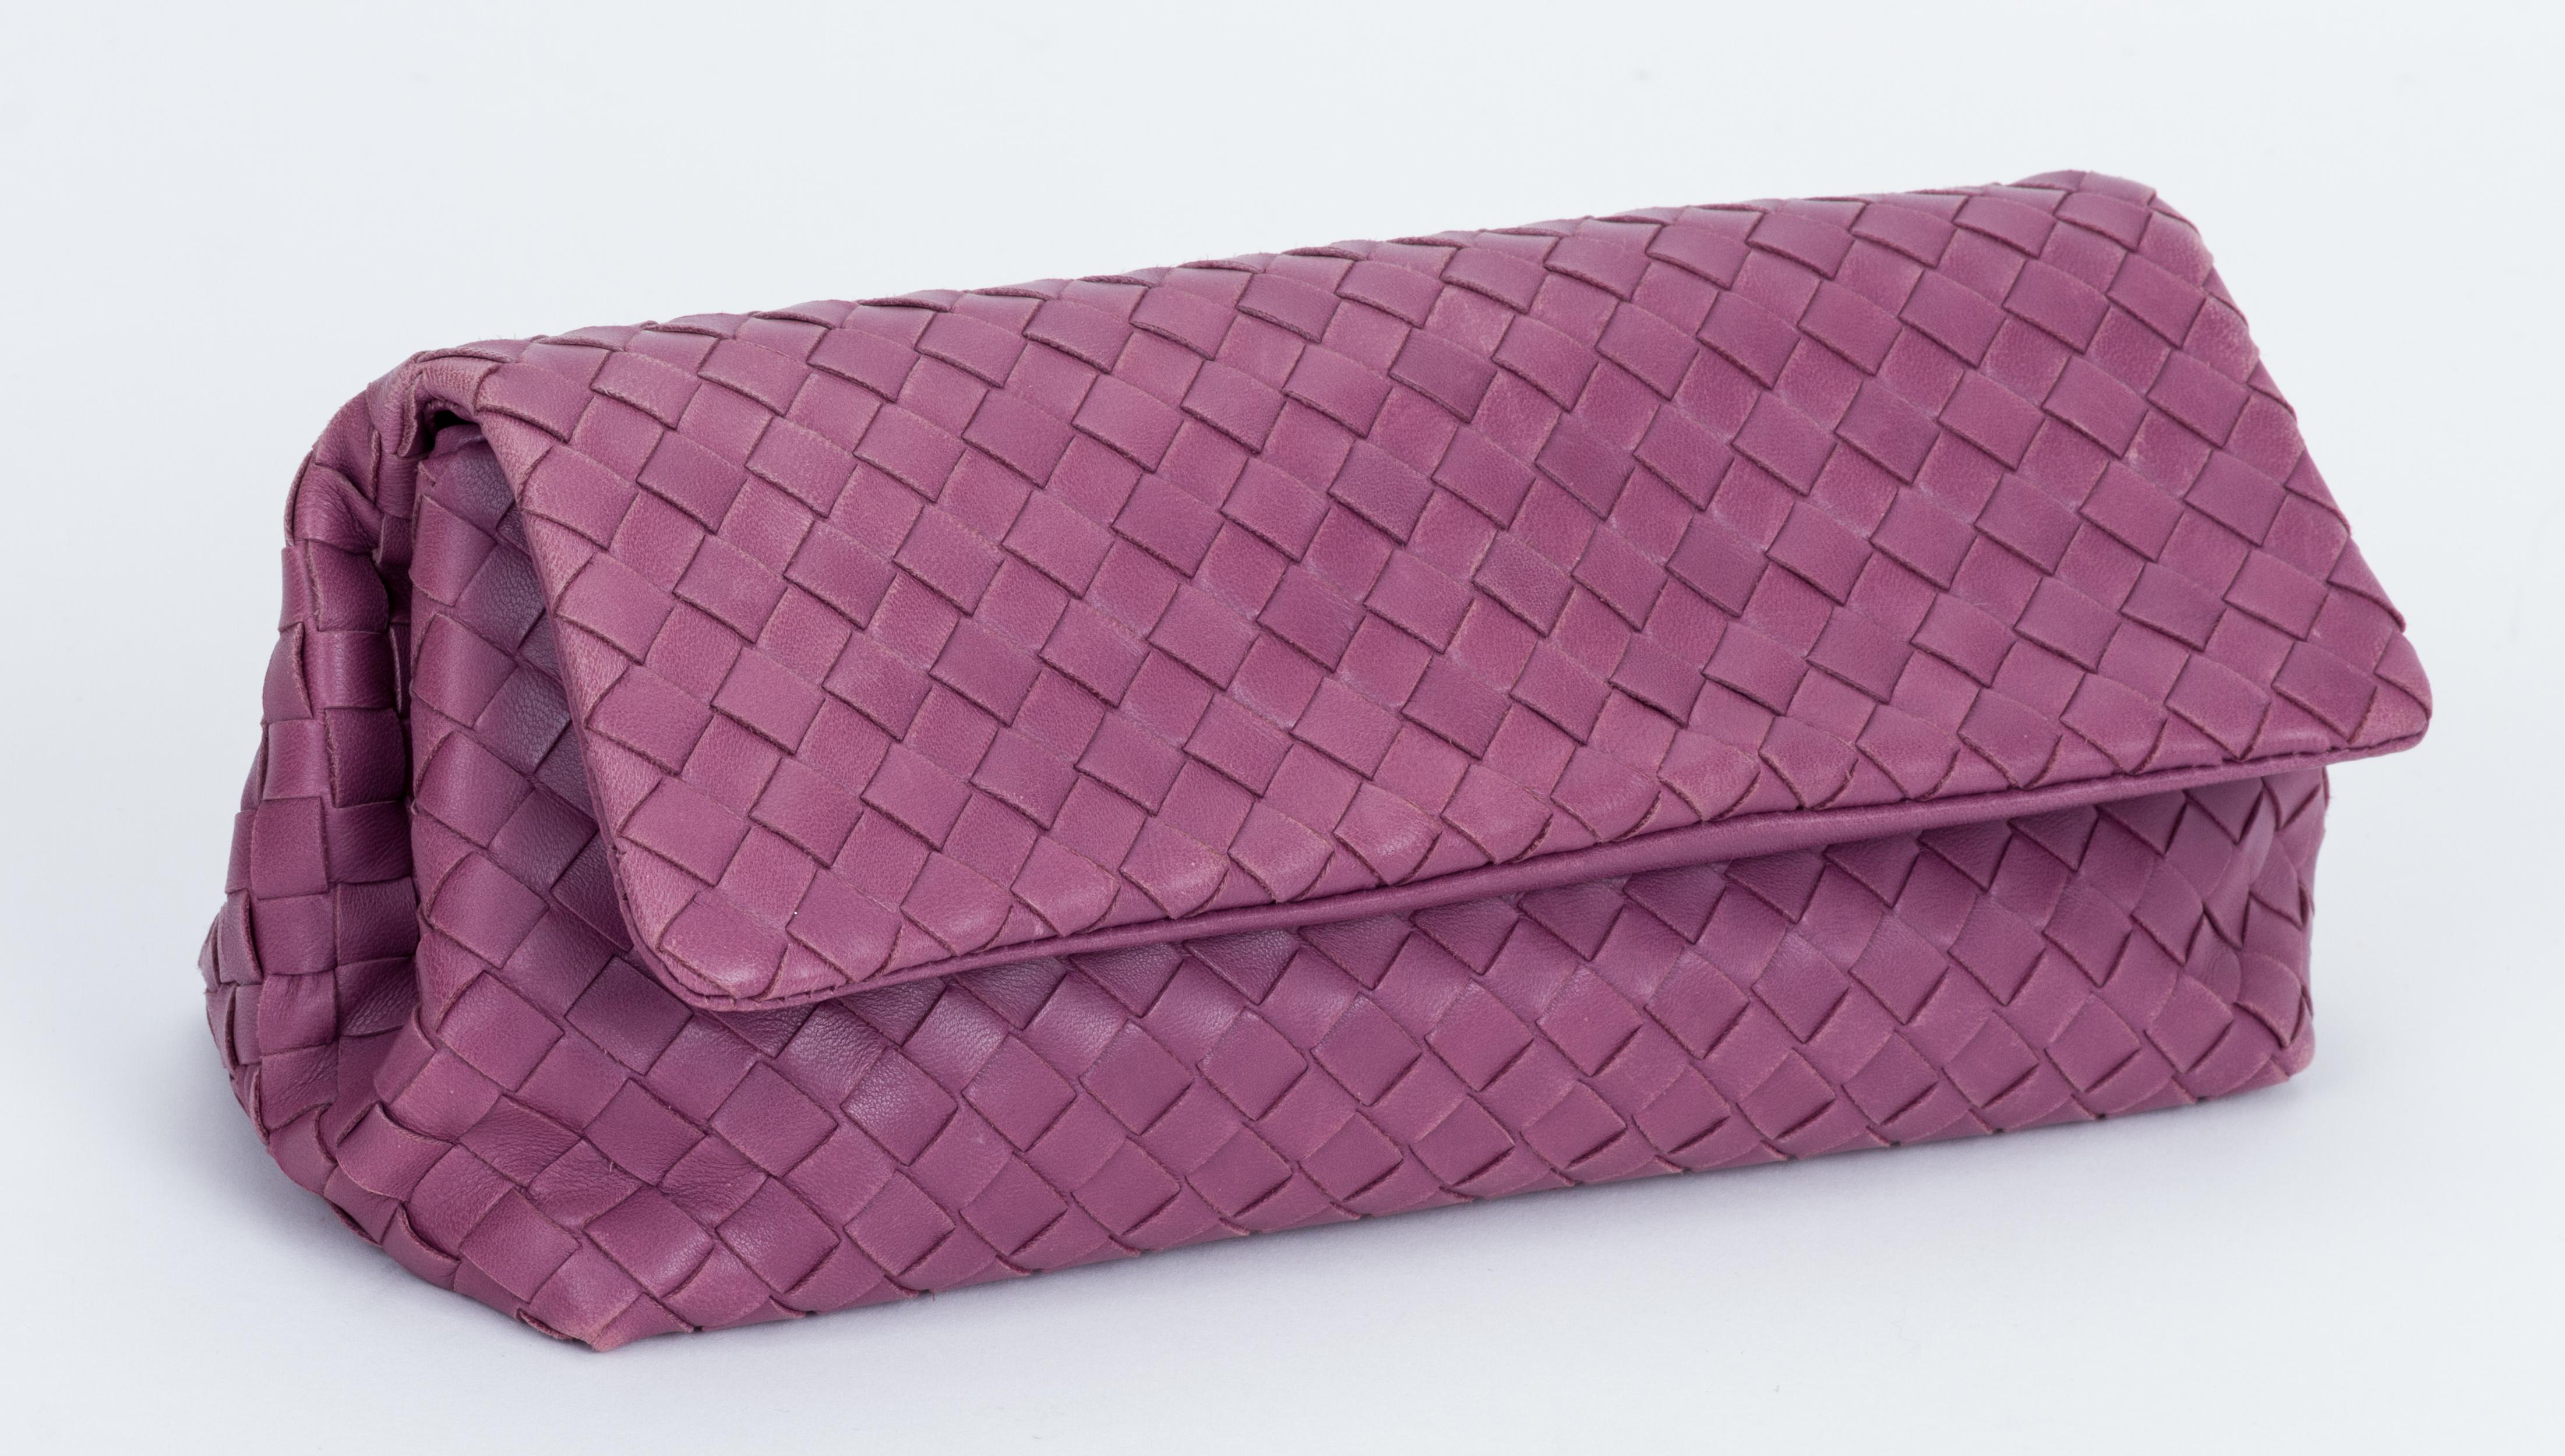 Bottega Veneta signature intrecciato purple clutch. Comes with generic dust cover.